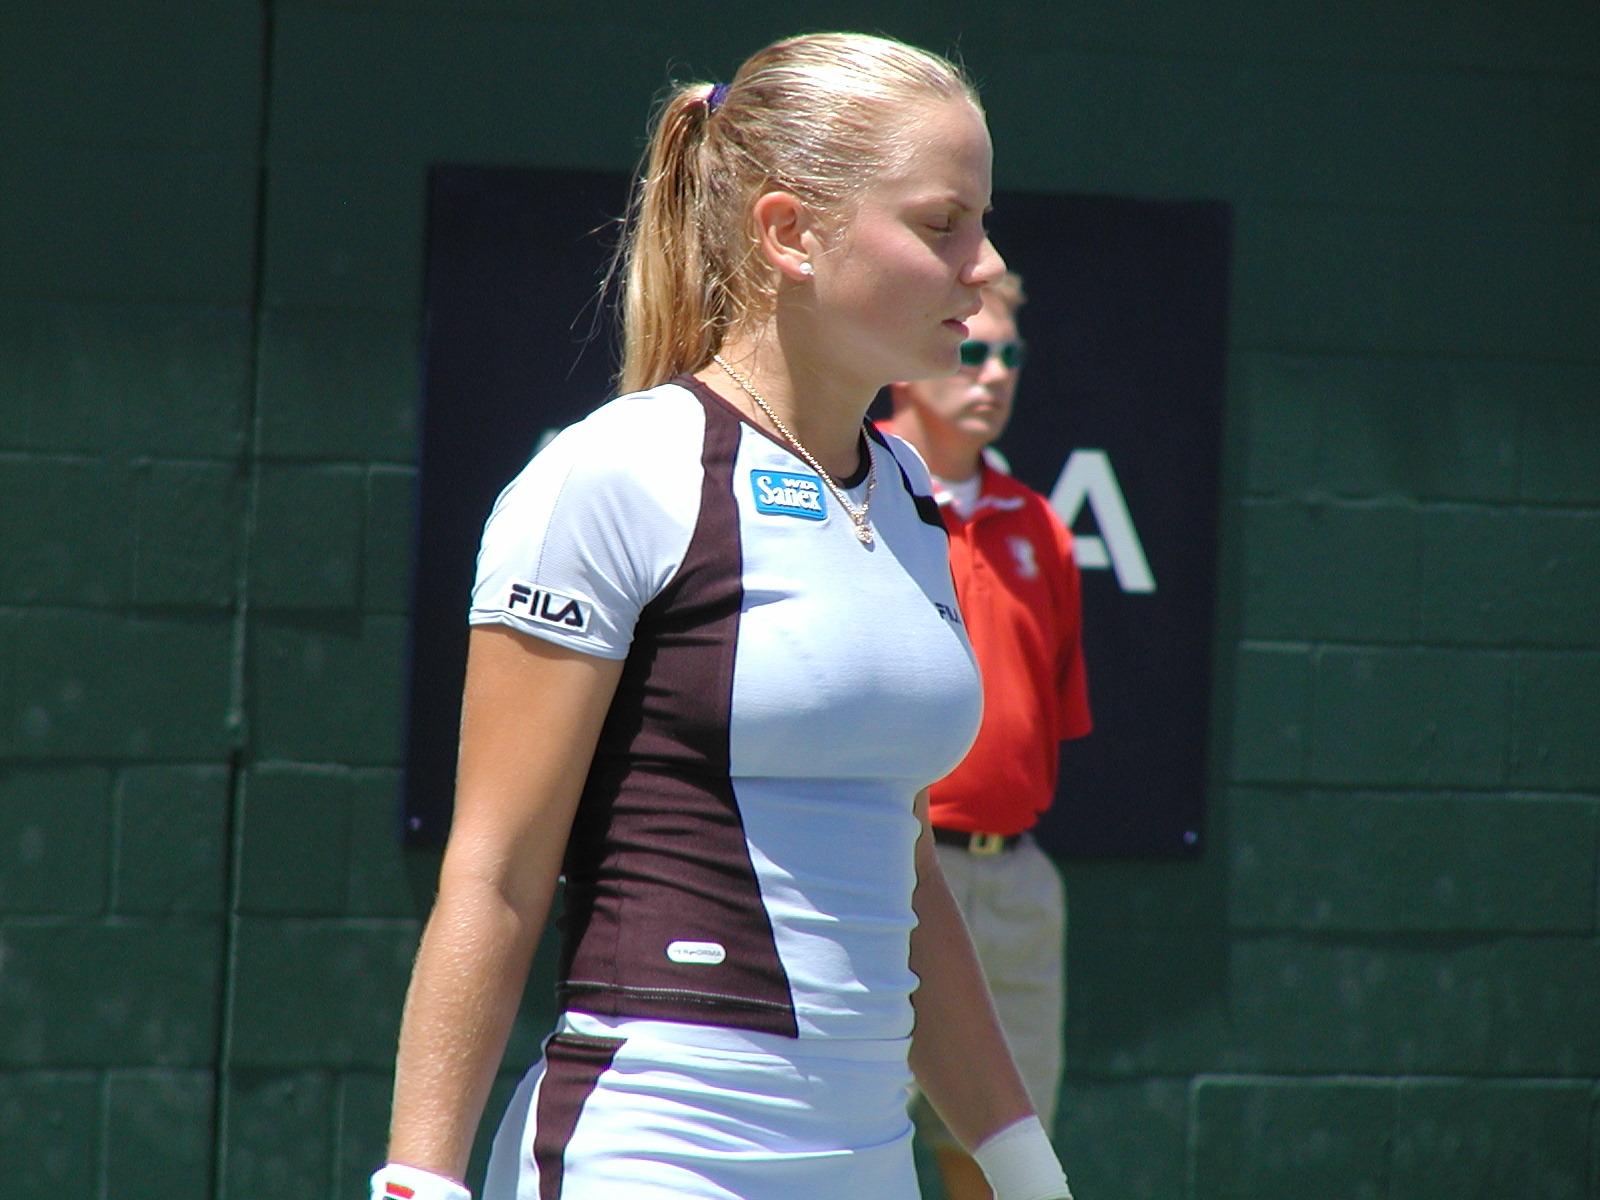 Female Tennis Players Biography Photos Wallpapers Videos: Jelena Dokic1600 x 1200